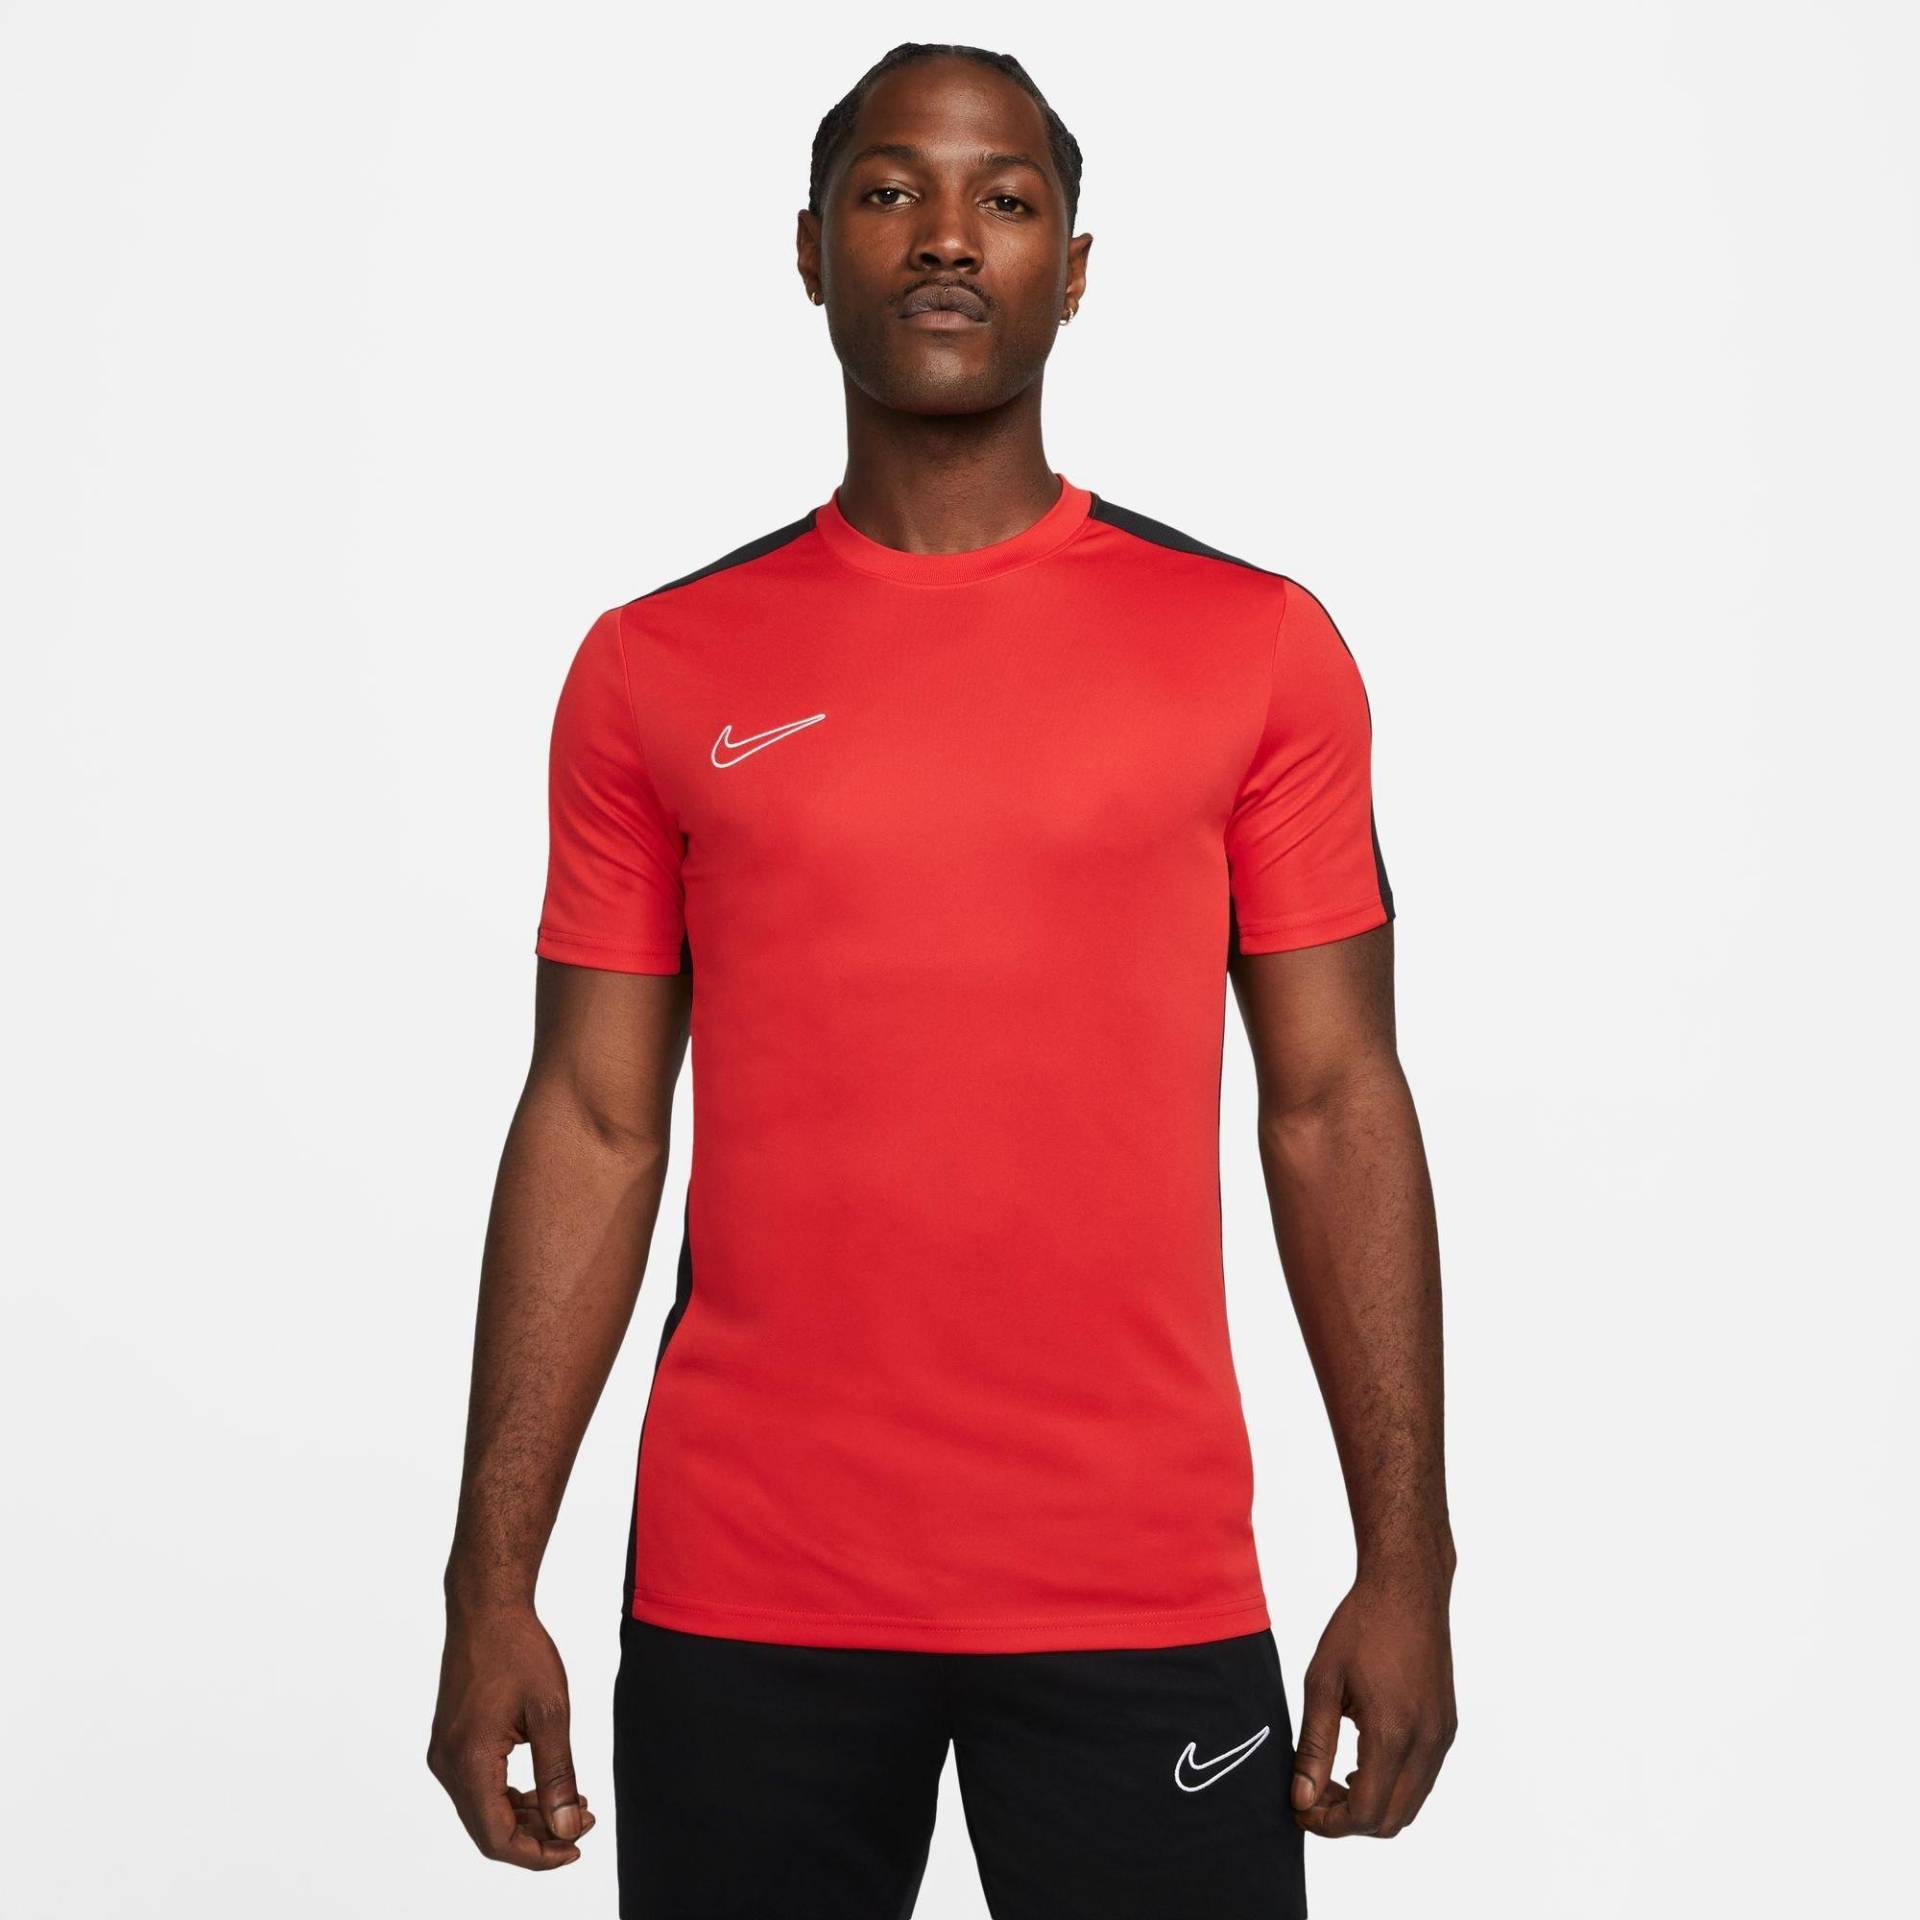 Fussball Shirt, Kurzarm Adult Herren Rot XL von NIKE